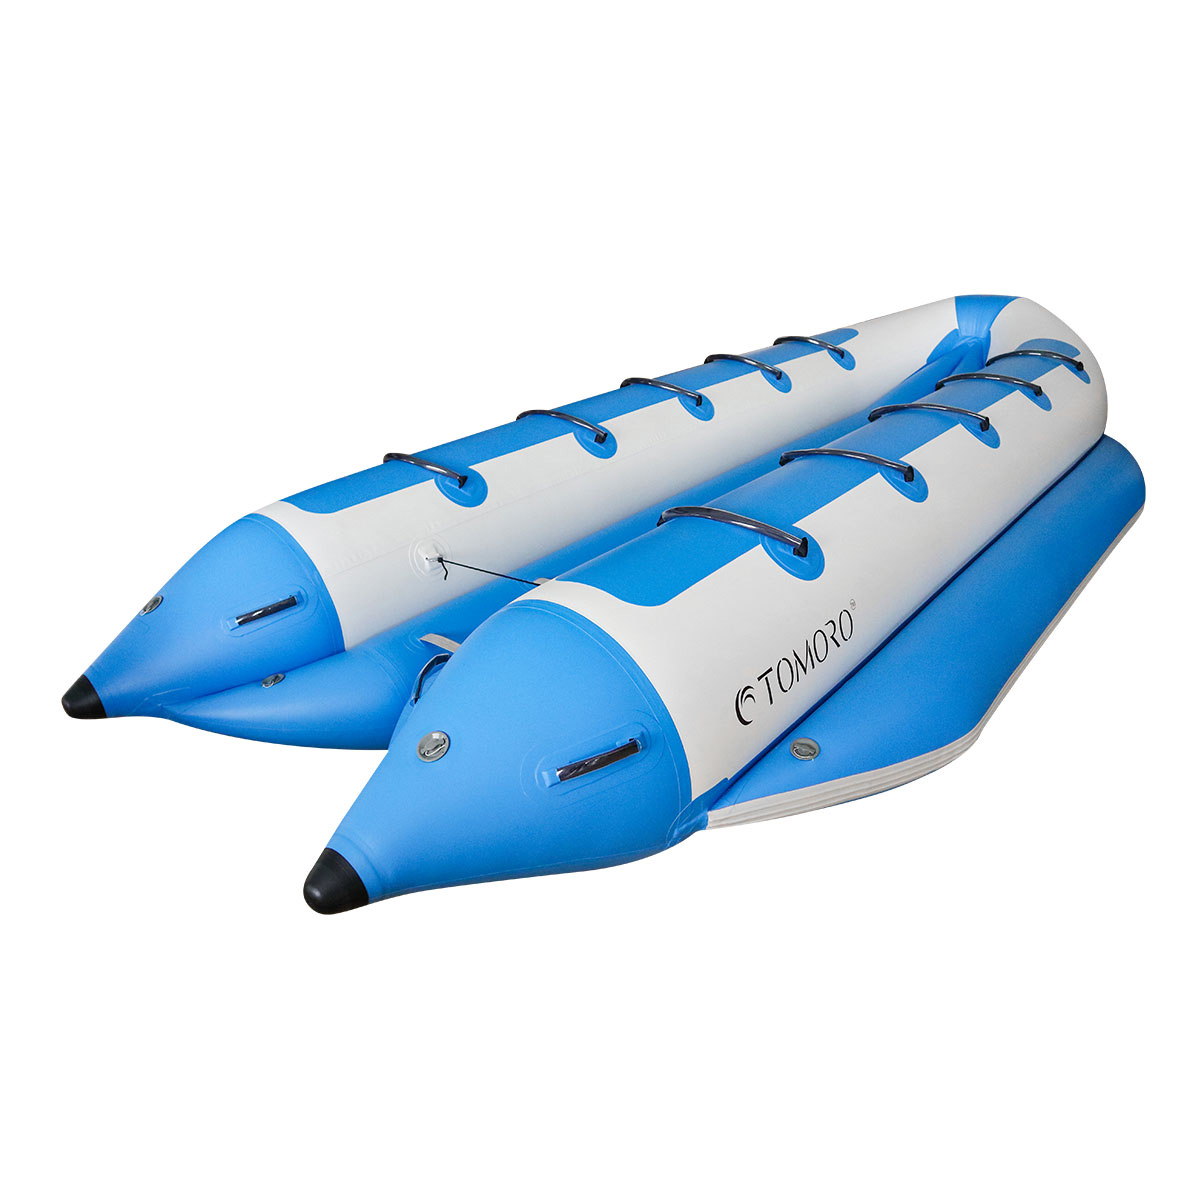 Inflatable ten seat blue banana boat